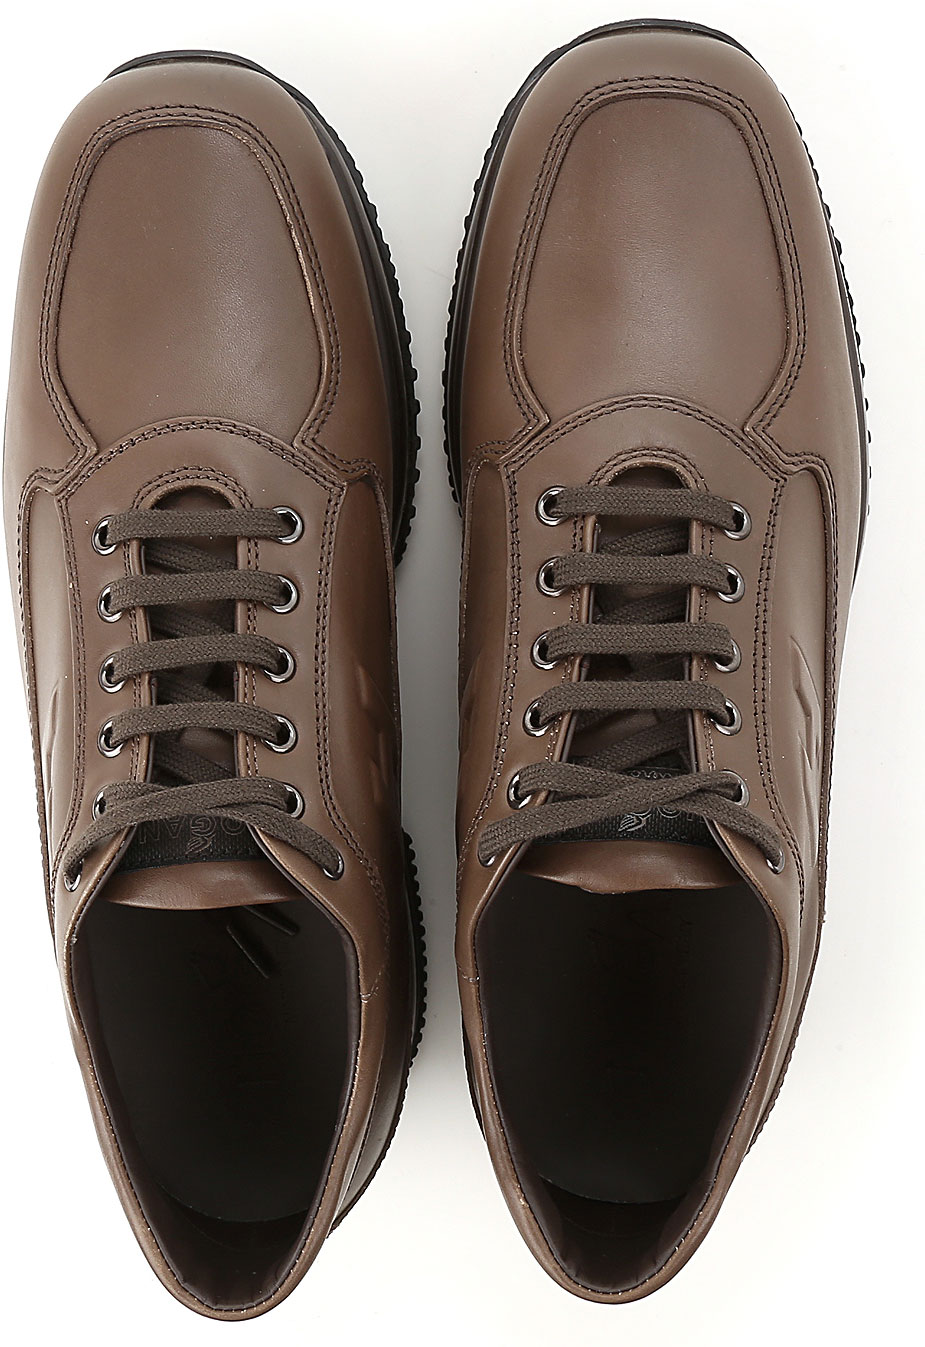 Mens Shoes Hogan, Style code: hxm00n090427x7c422--